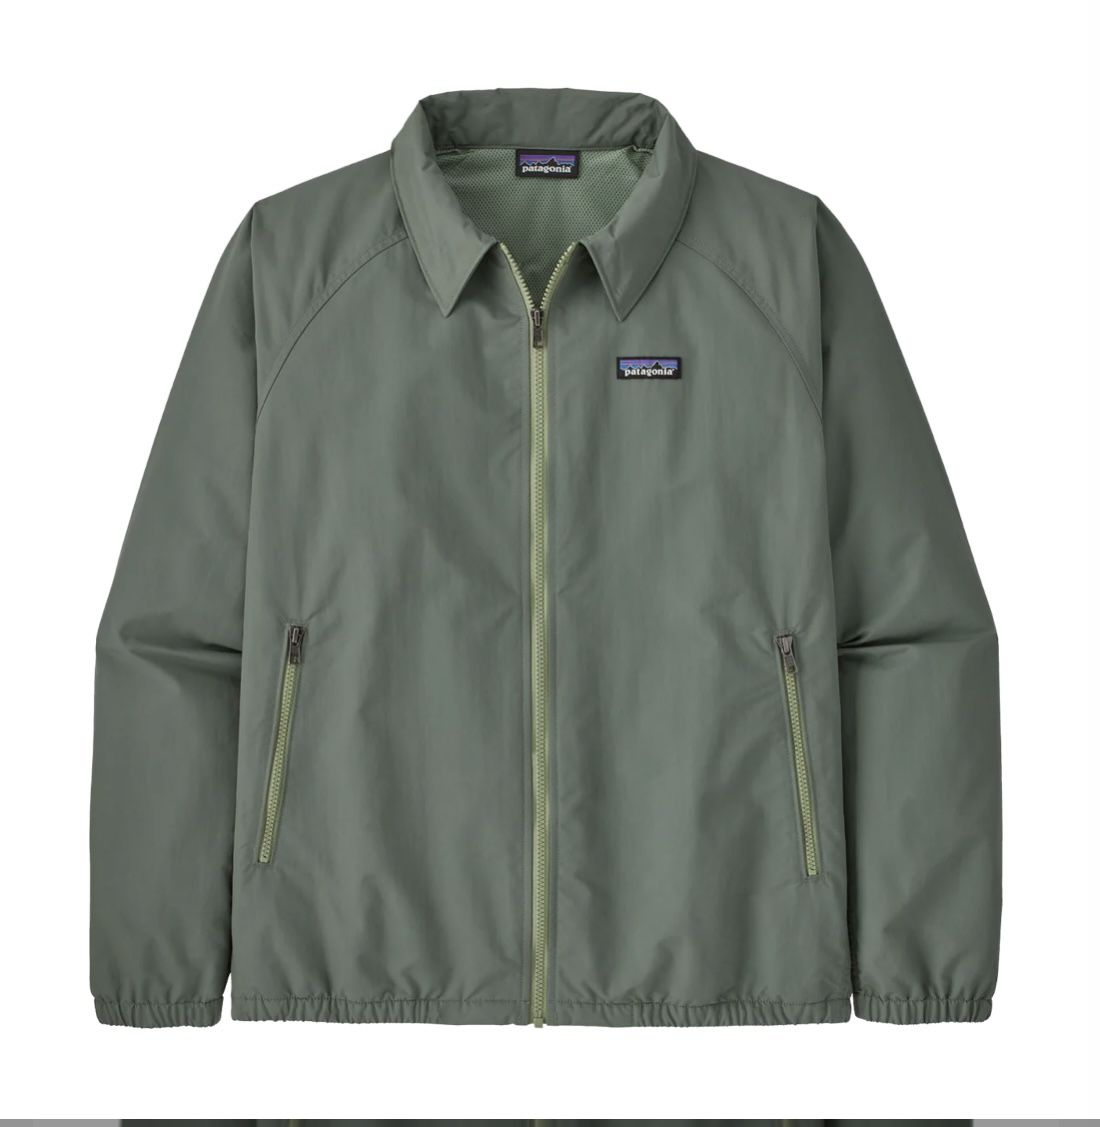 [New] Patagonia Men’s Baggies Jacket